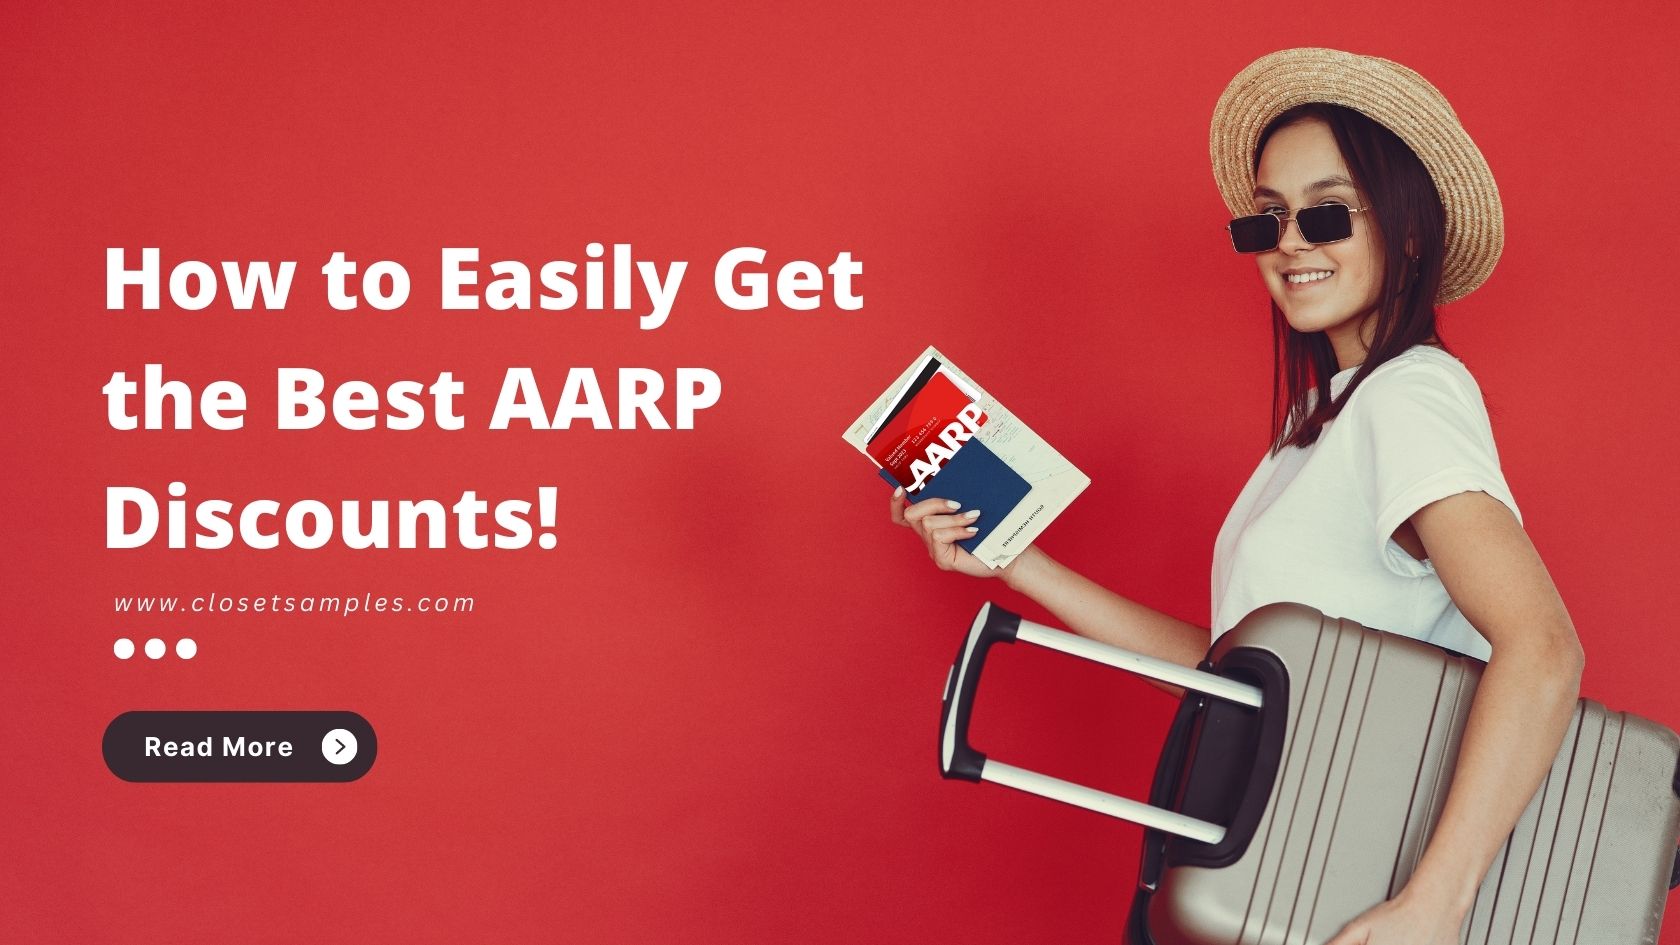 How to Easily Get the Best AAR...